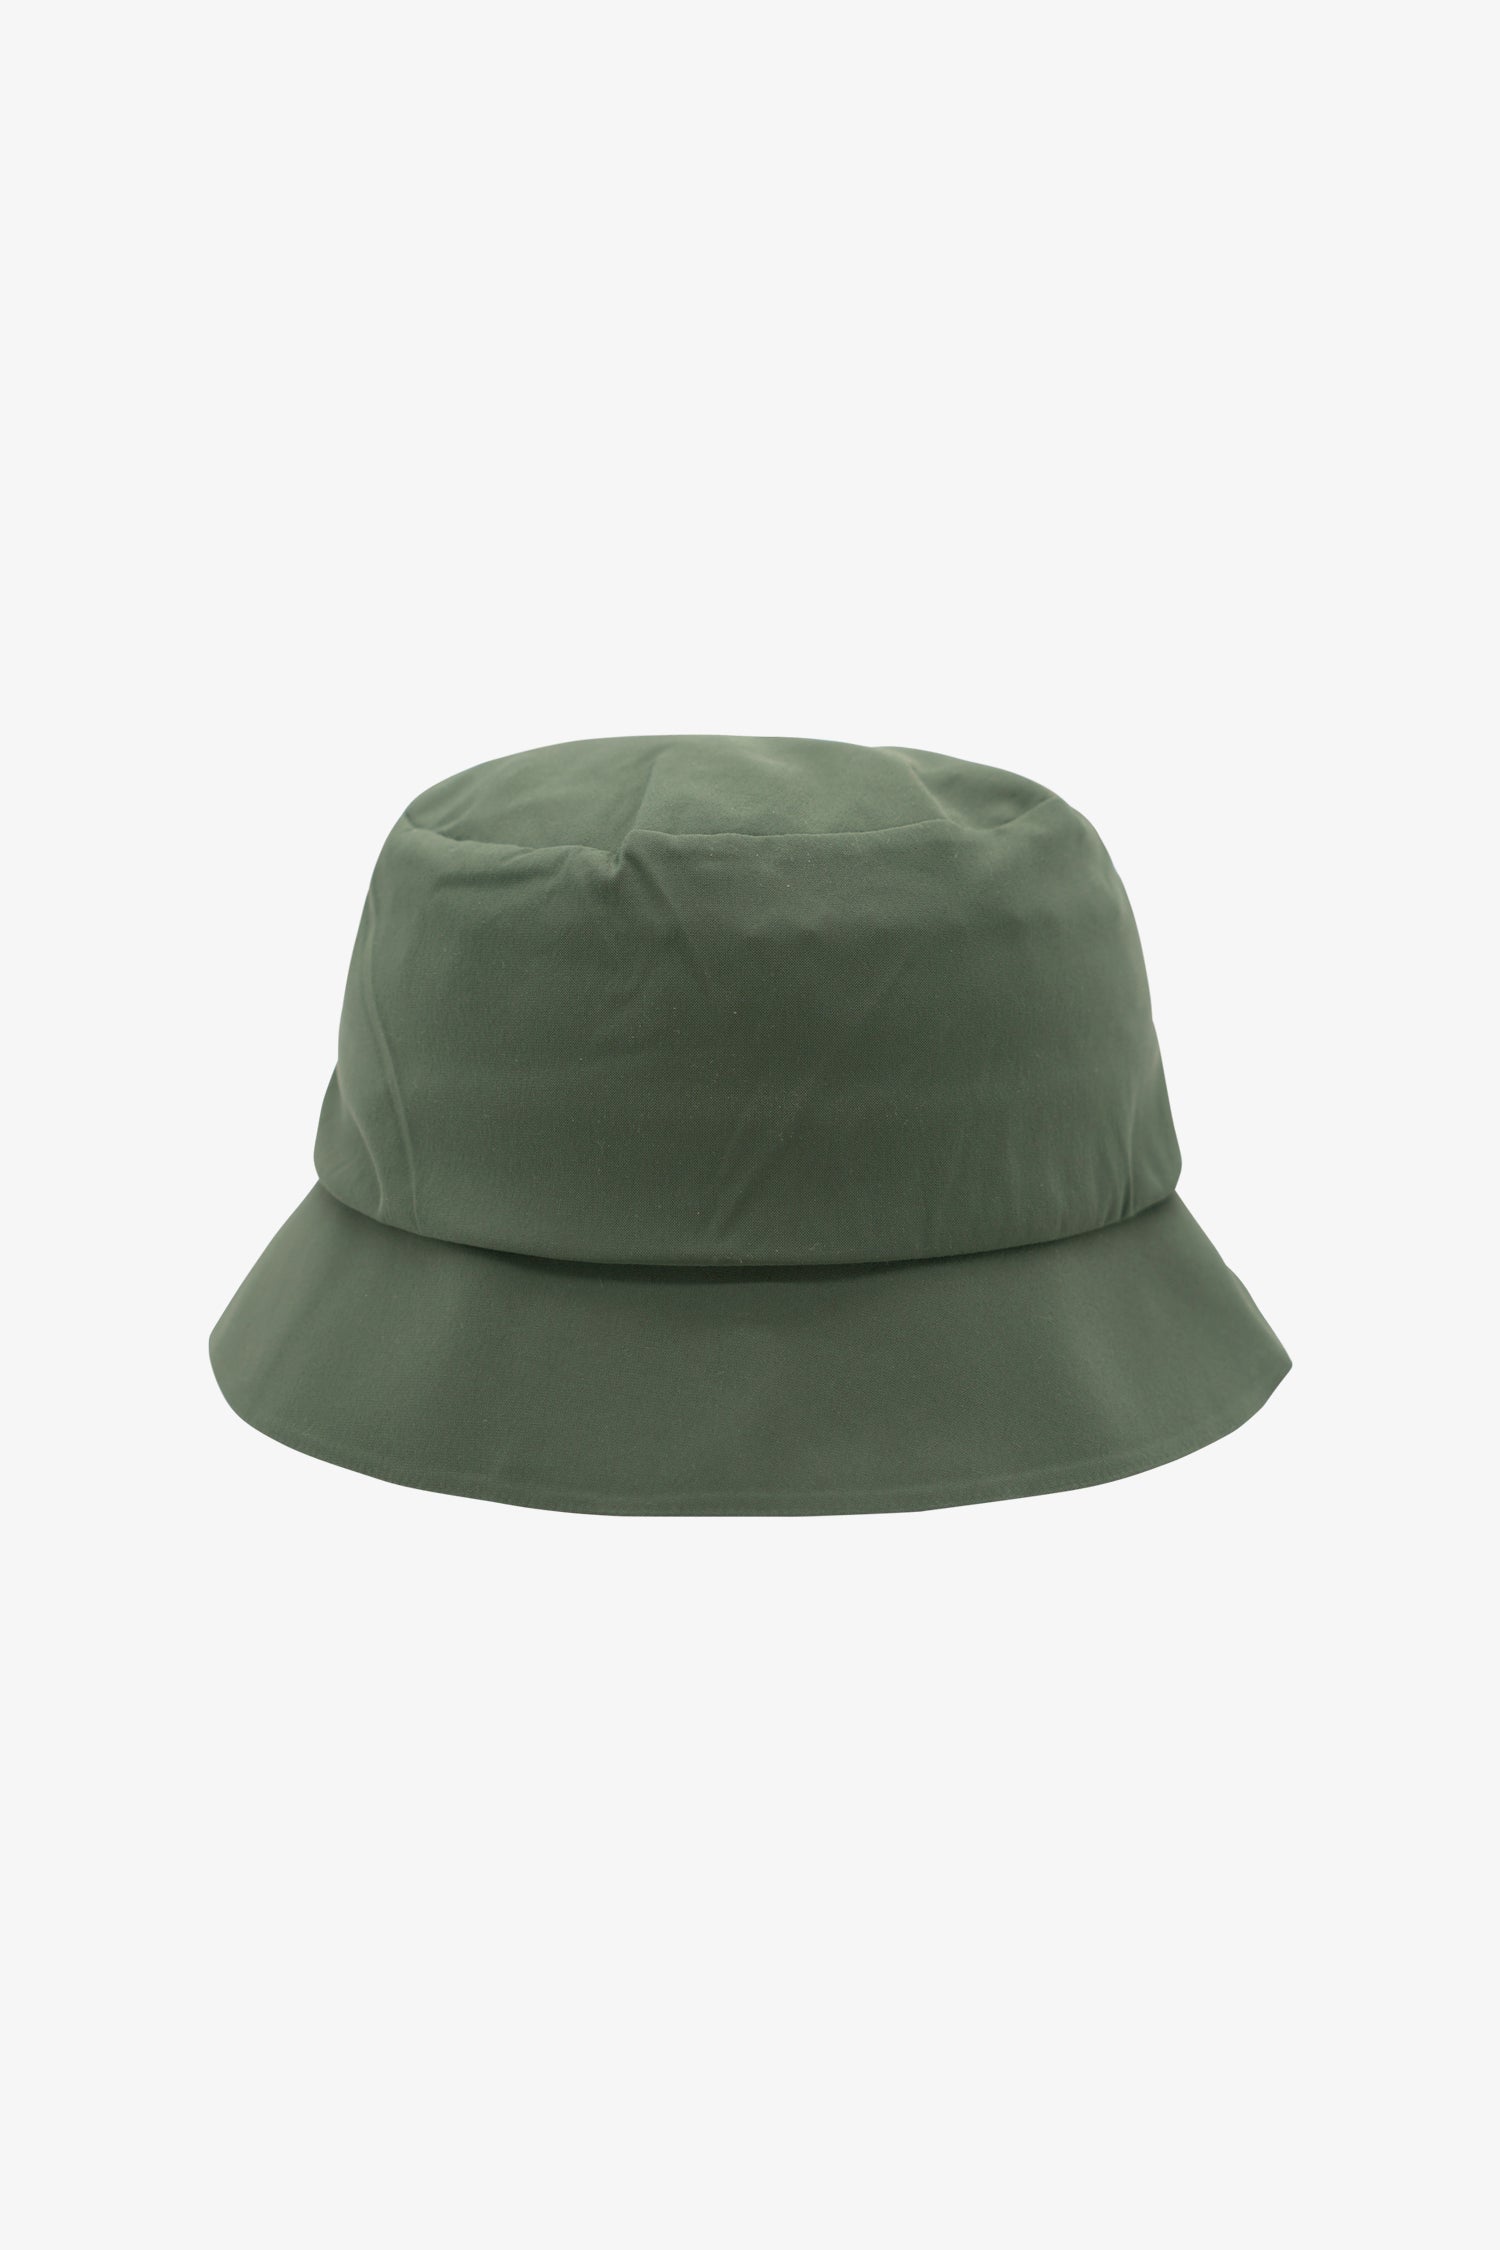 Selectshop FRAME - AFFIX Stow Bucket Hat All-Accessories Dubai